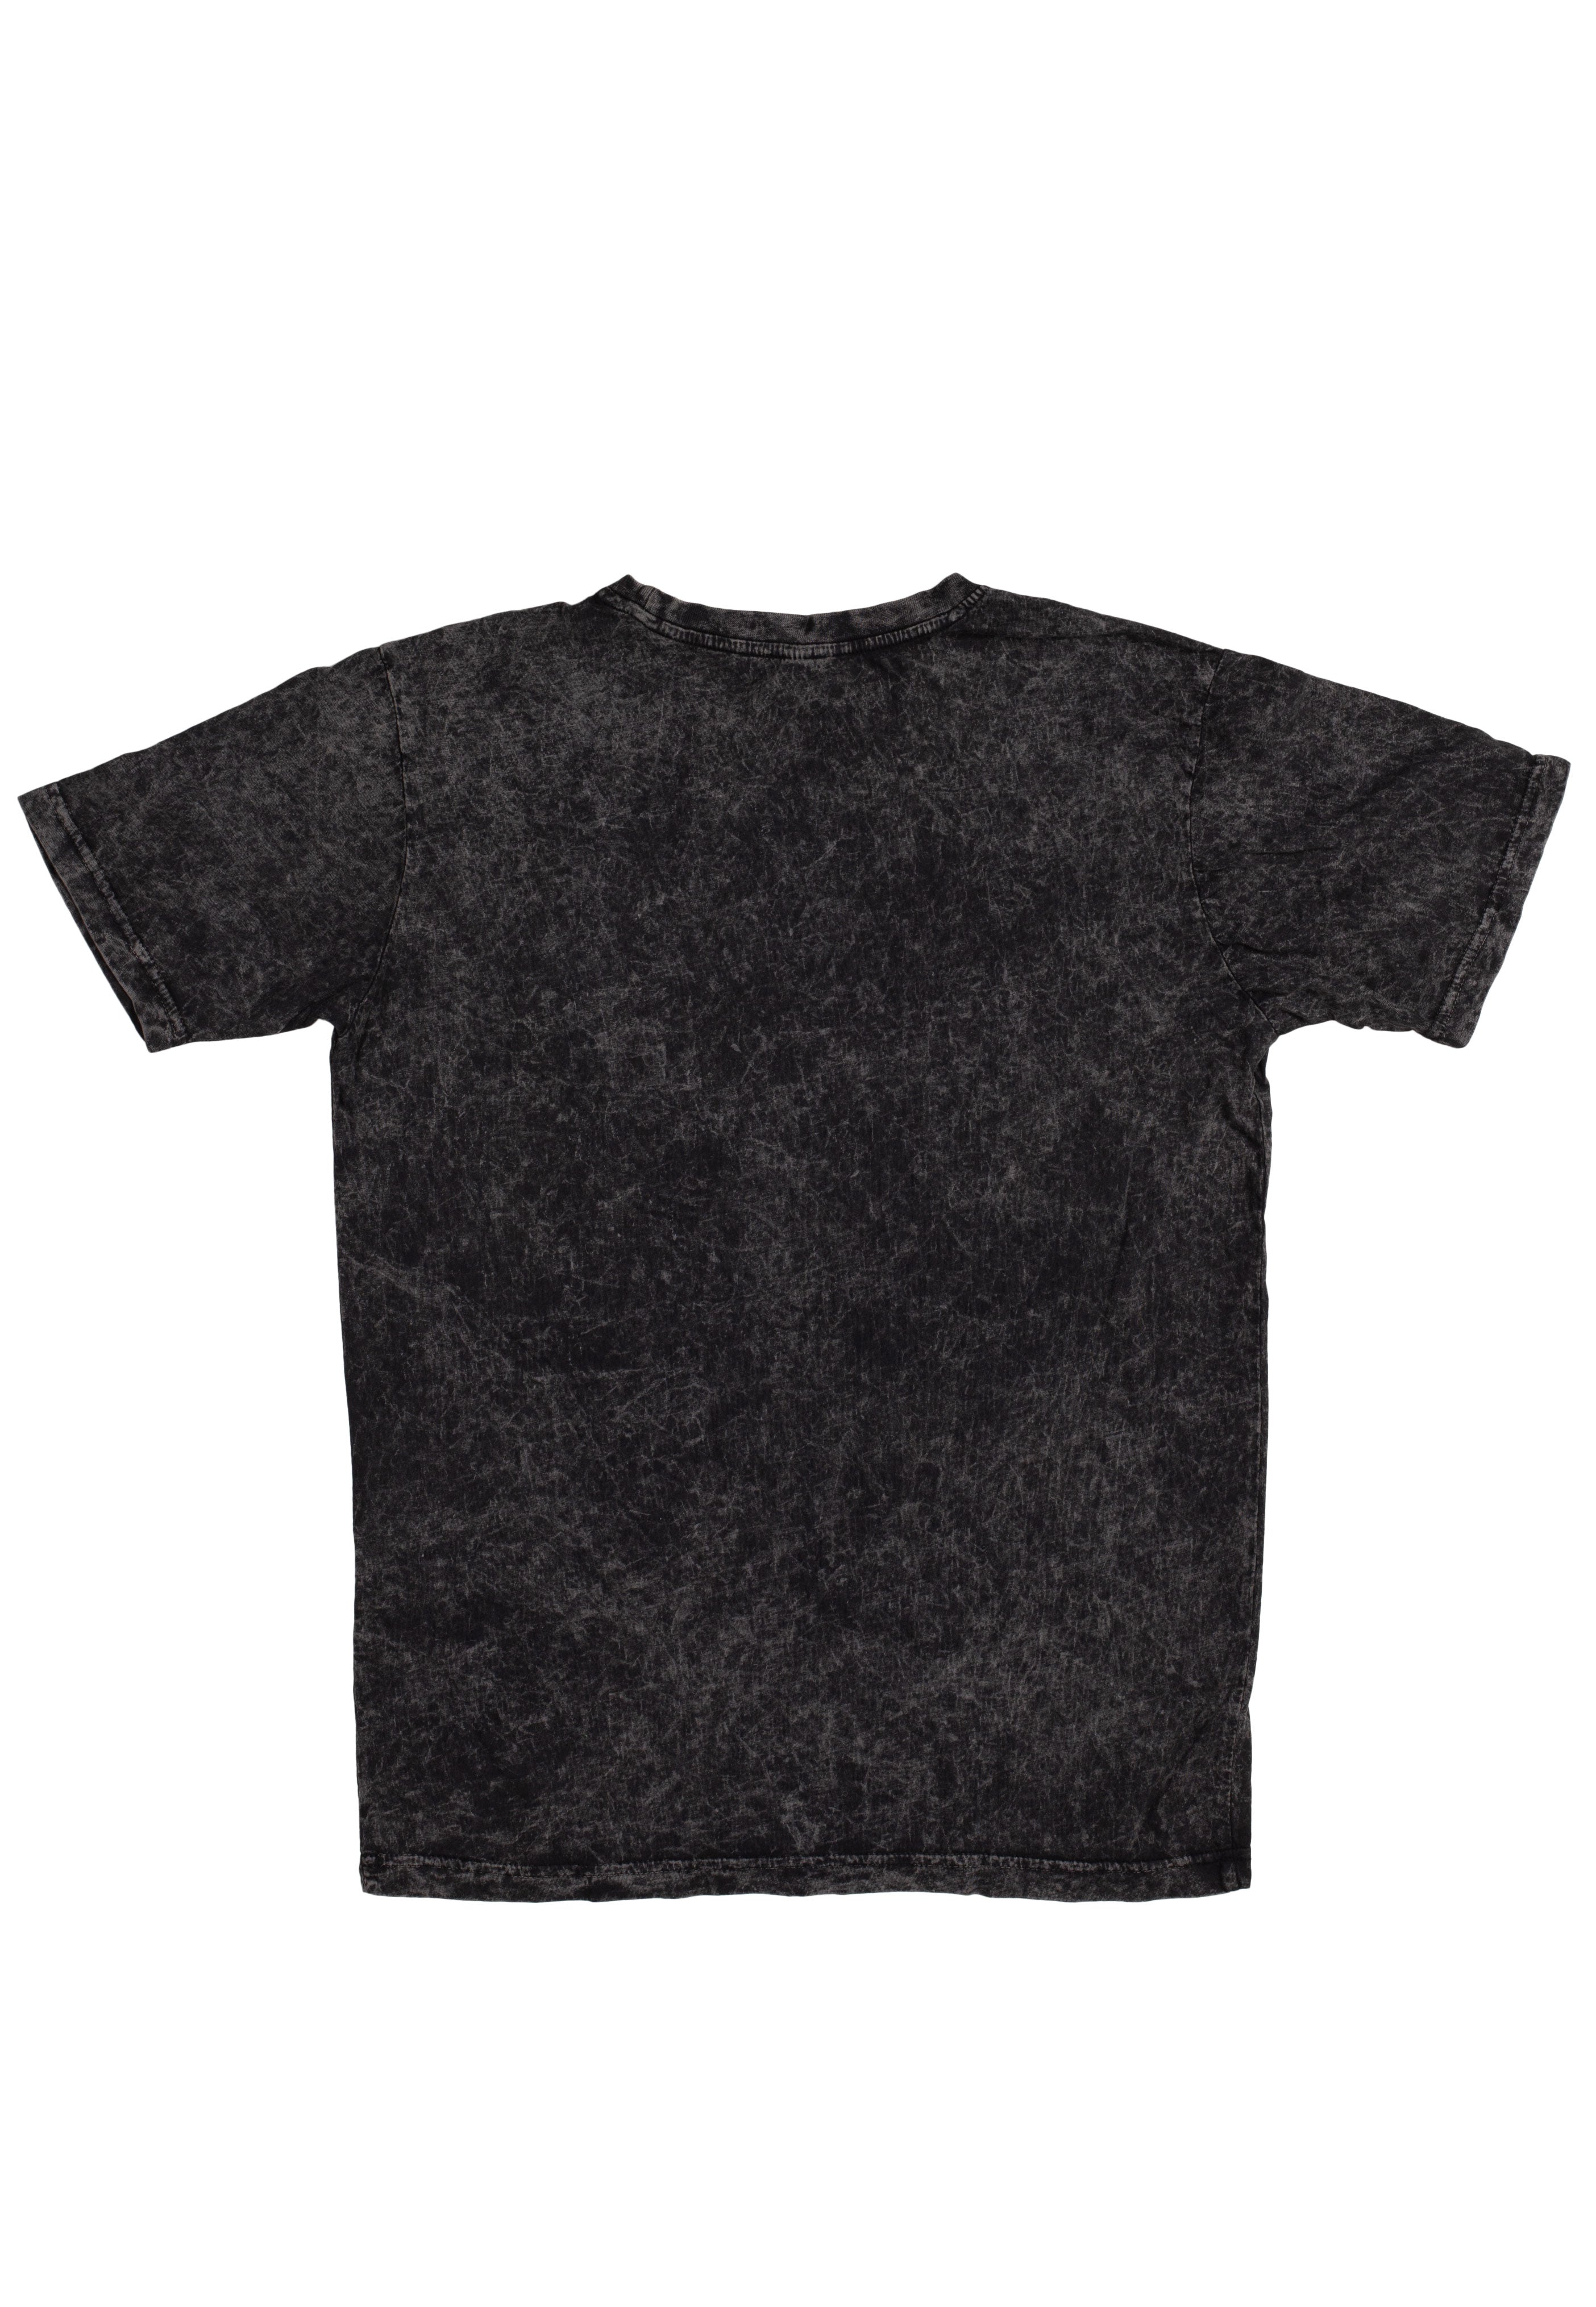 Carnifex - Tree Logo Grey Acid Wash - T-Shirt